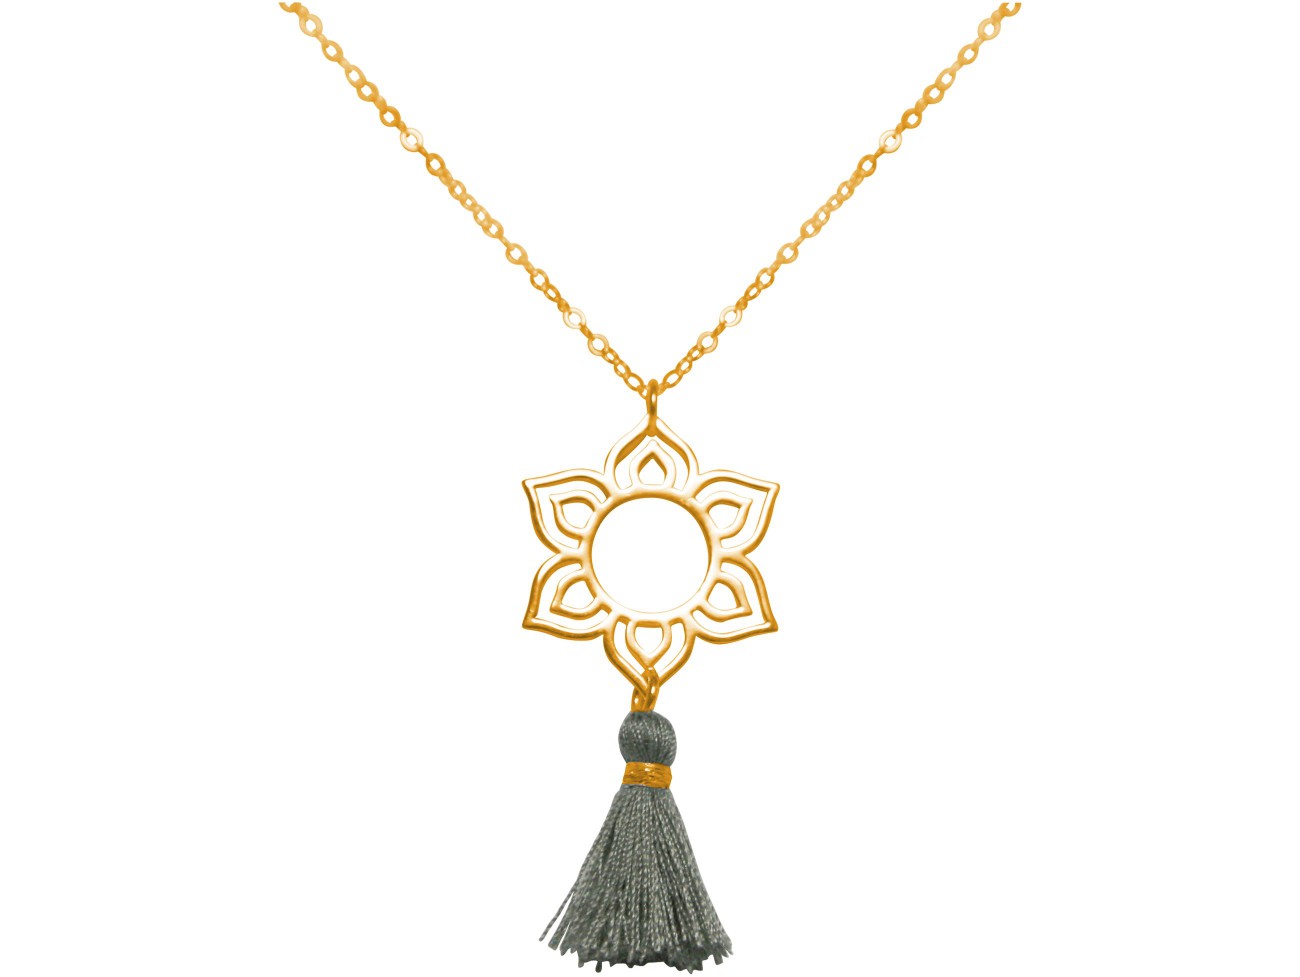 Gemshine - Damen - Halskette - Anhänger - 925 Silber - Vergoldet - Lotus Blume - Mandala - Quaste - Grau - YOGA - 45 cm